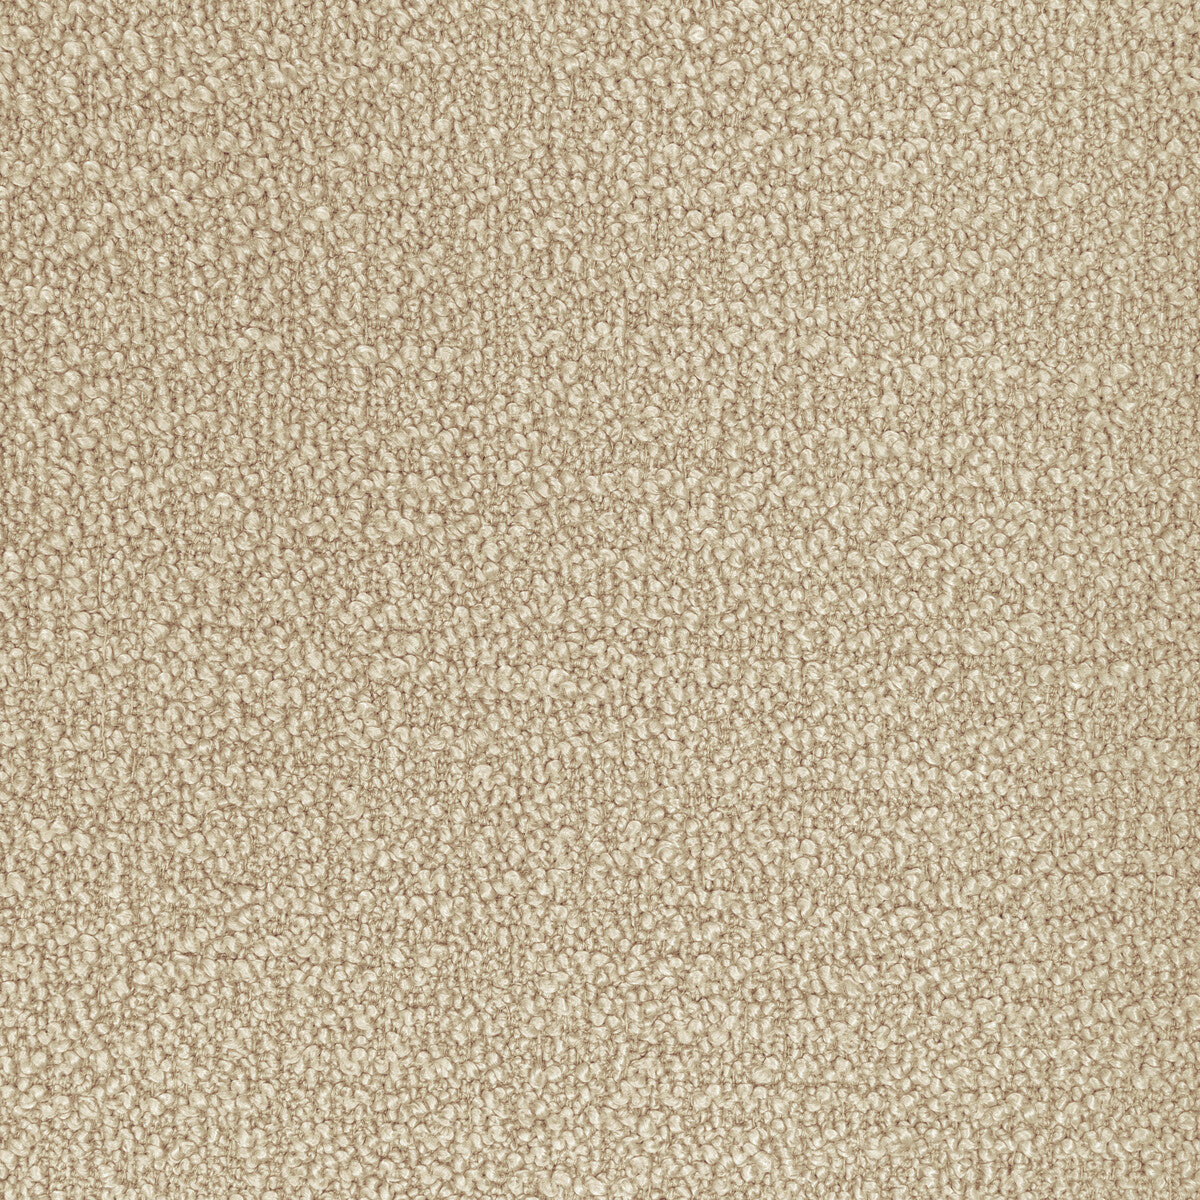 Kravet Smart fabric in 36857-16 color - pattern 36857.16.0 - by Kravet Smart in the Performance Kravetarmor collection